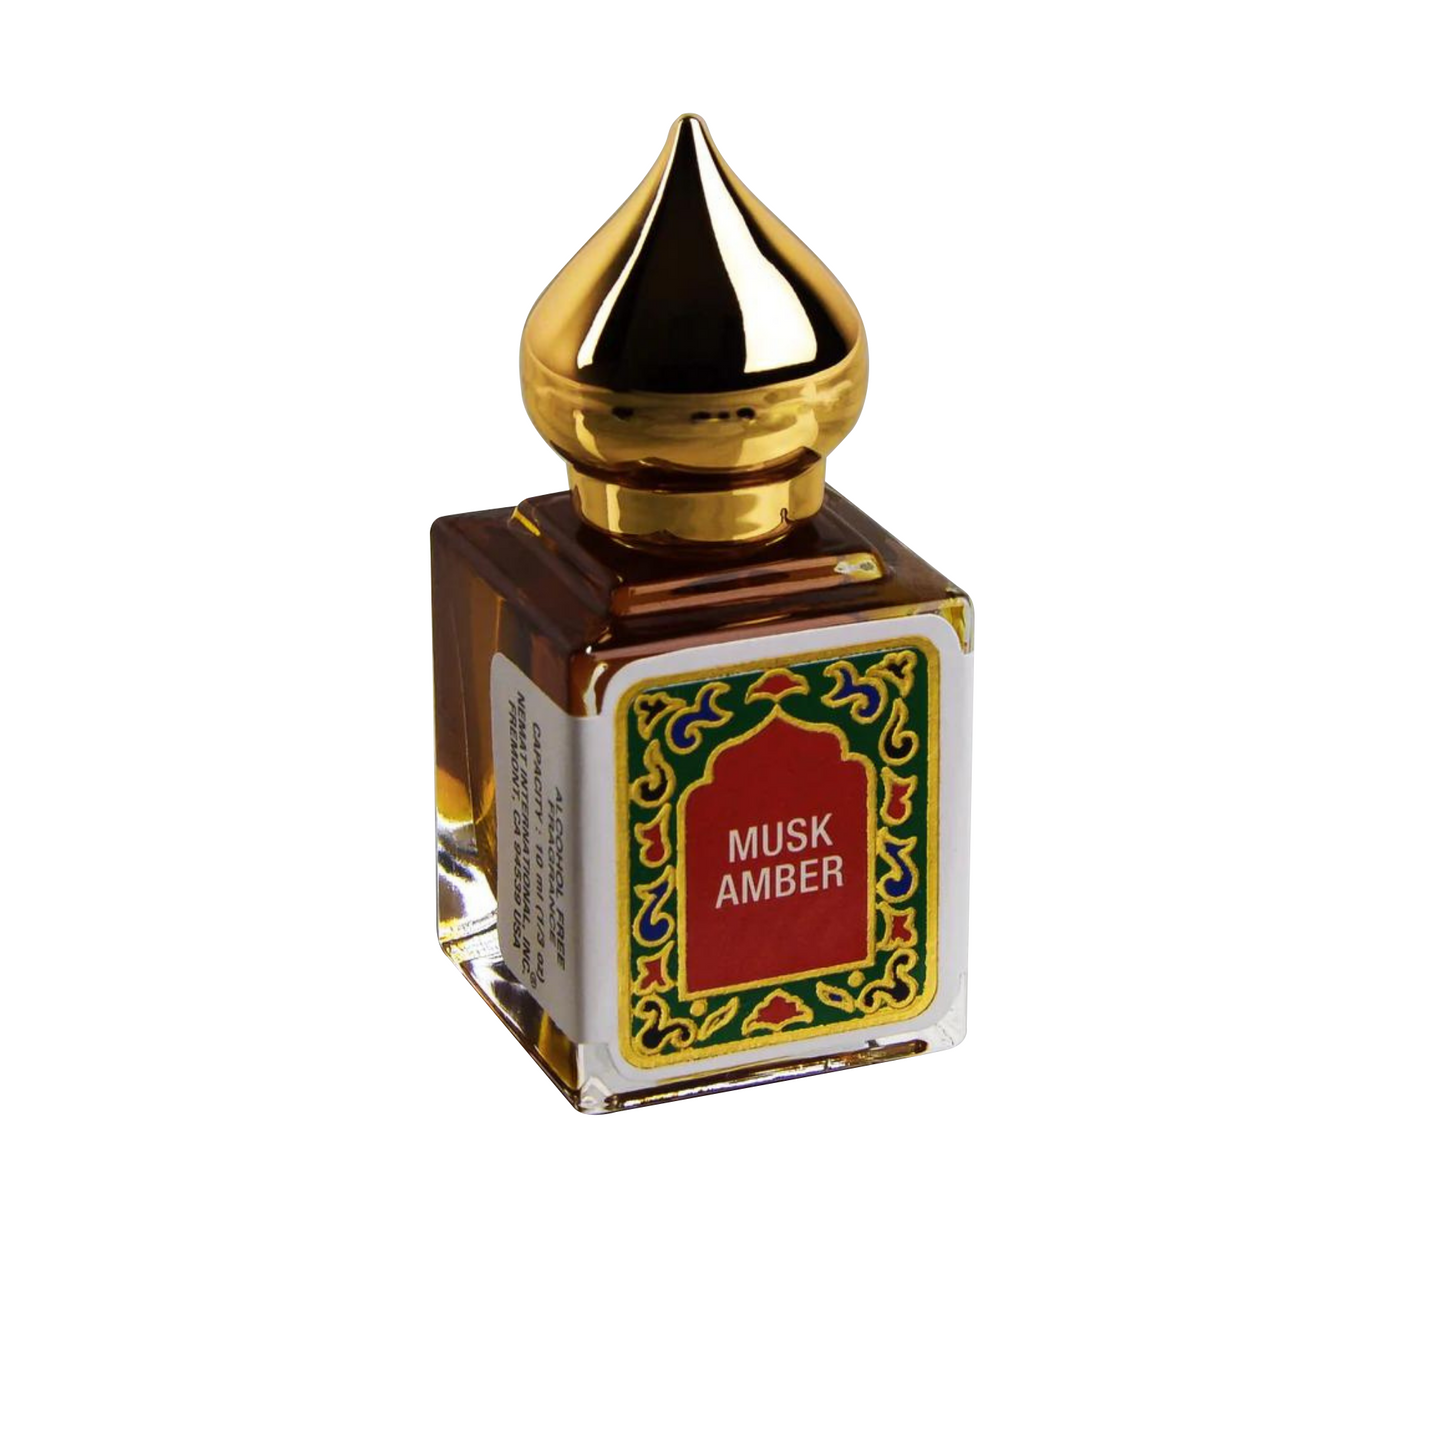 Primary image of Musk Amber Fragrance Minaret Cap